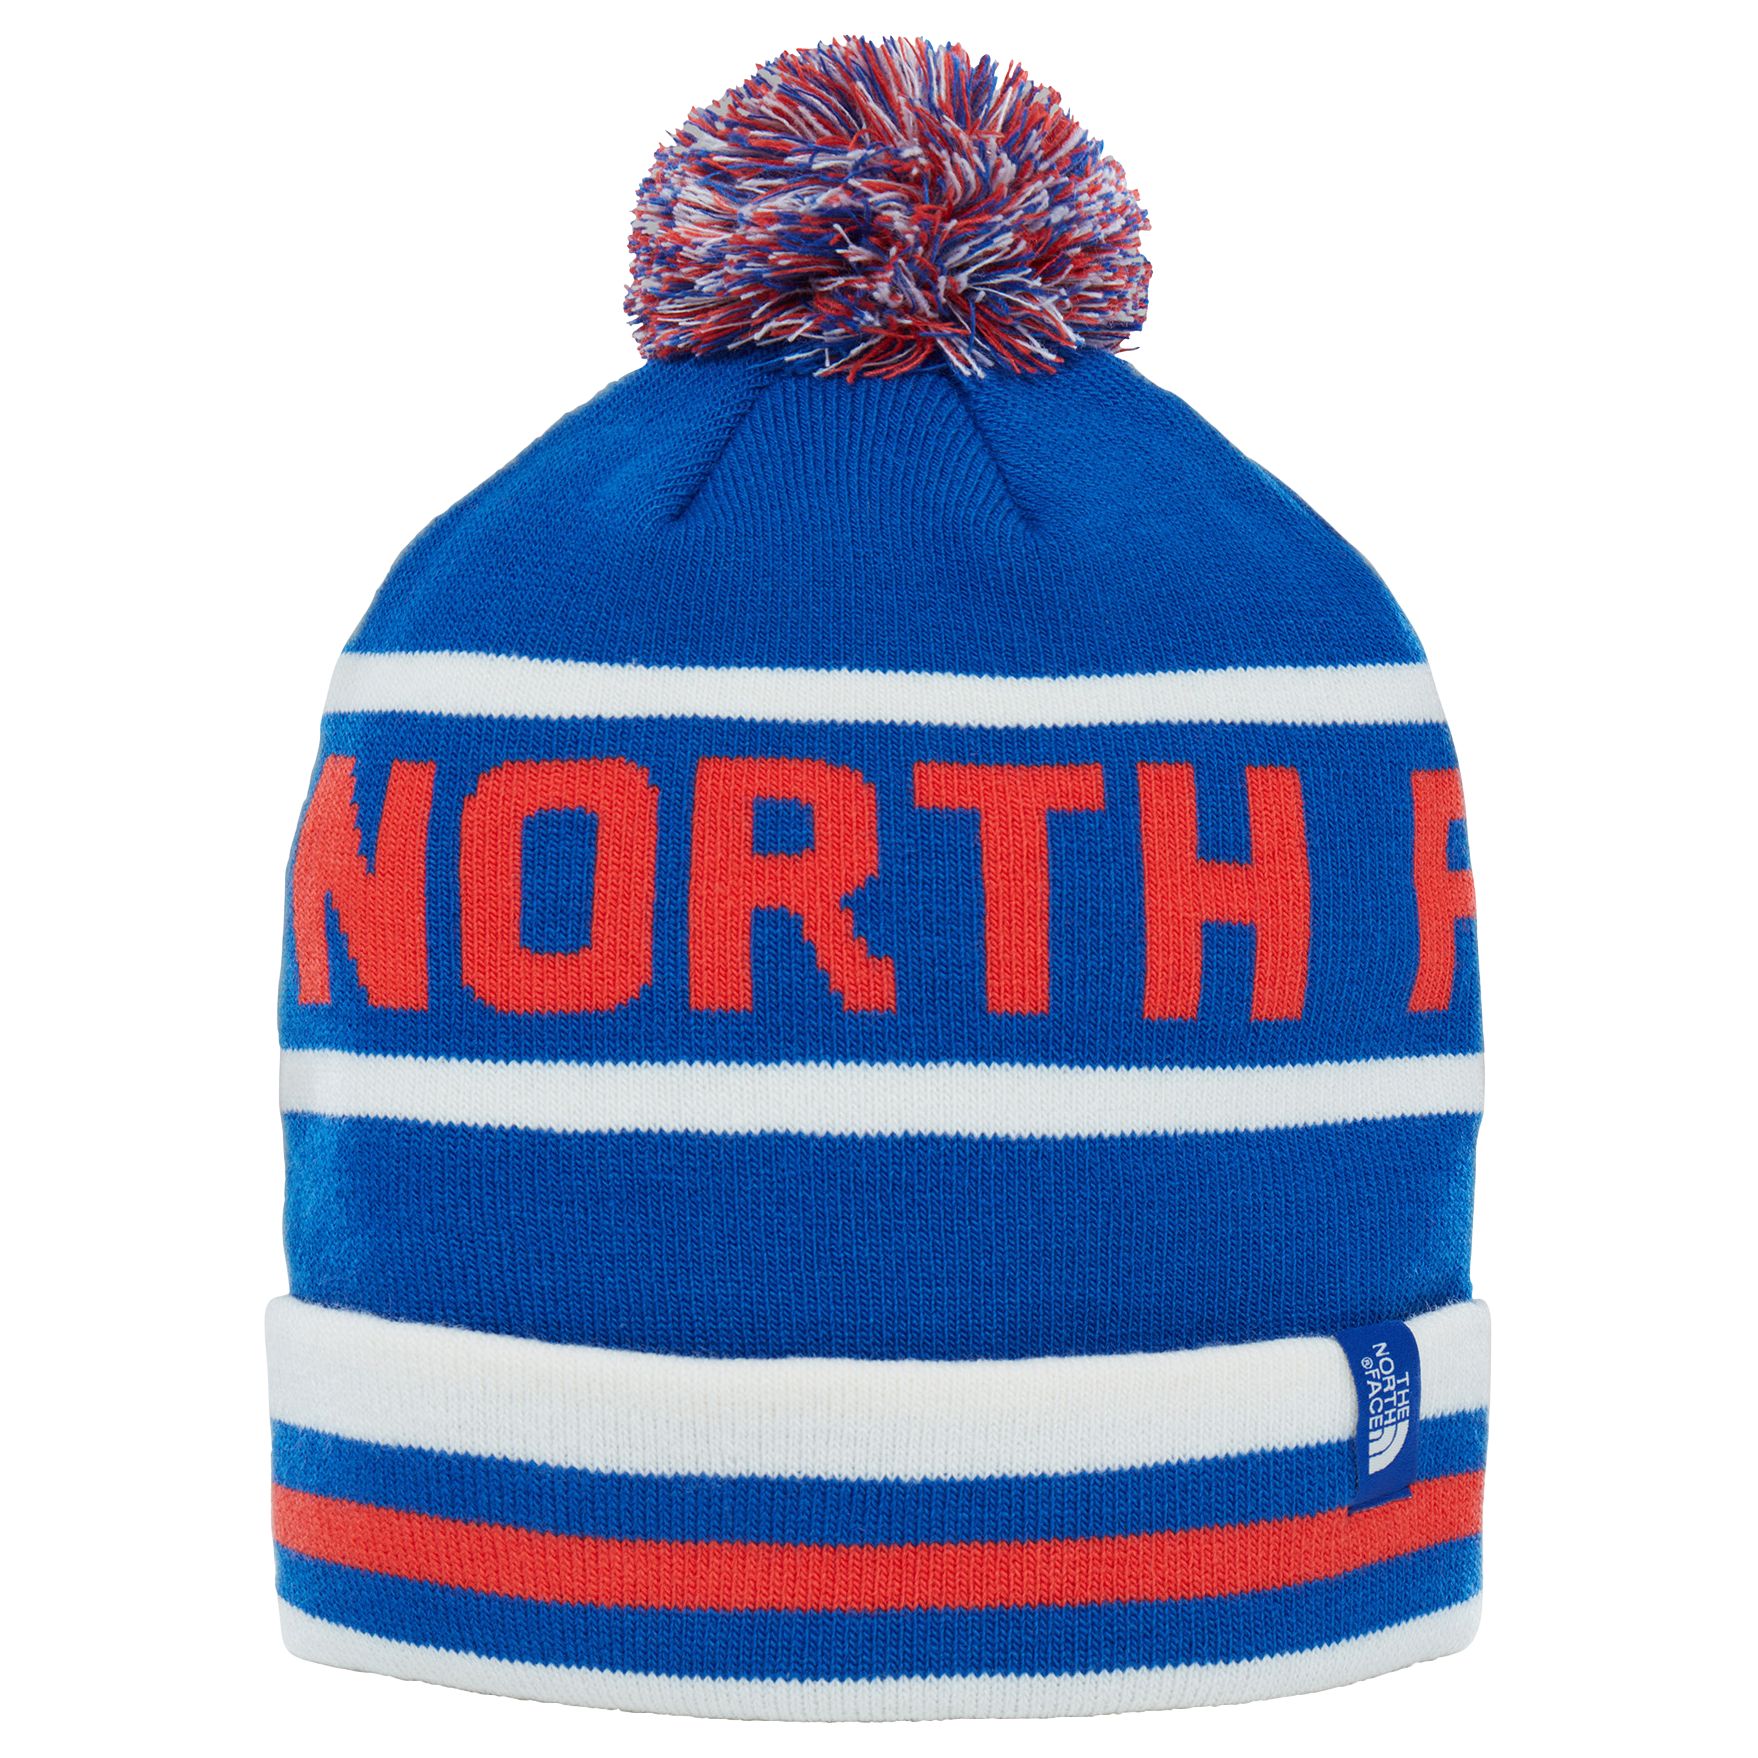 north face ski hat